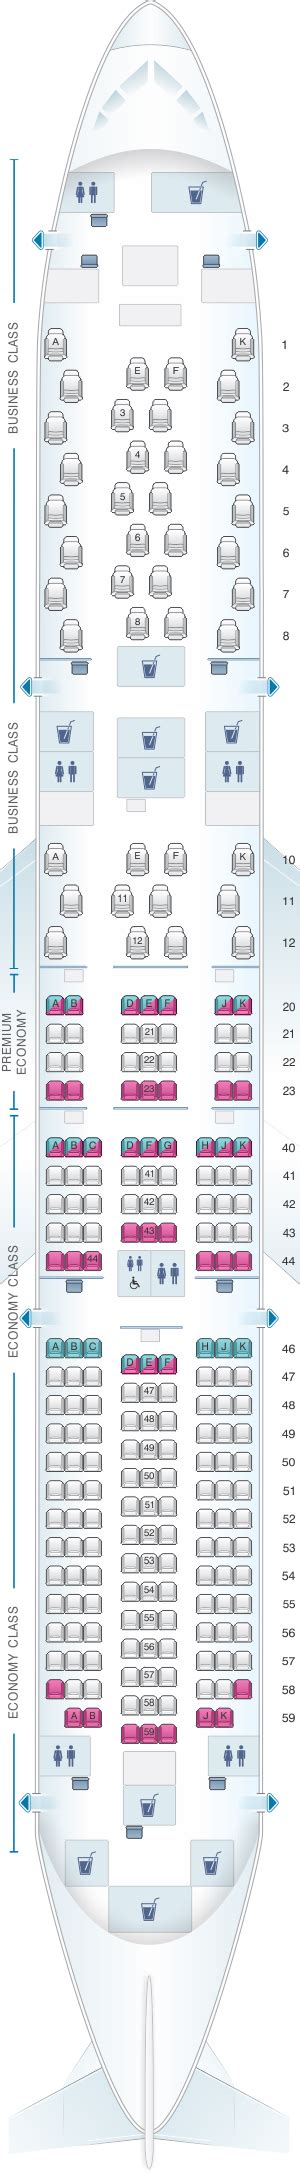 qantas a380 business class seating plan